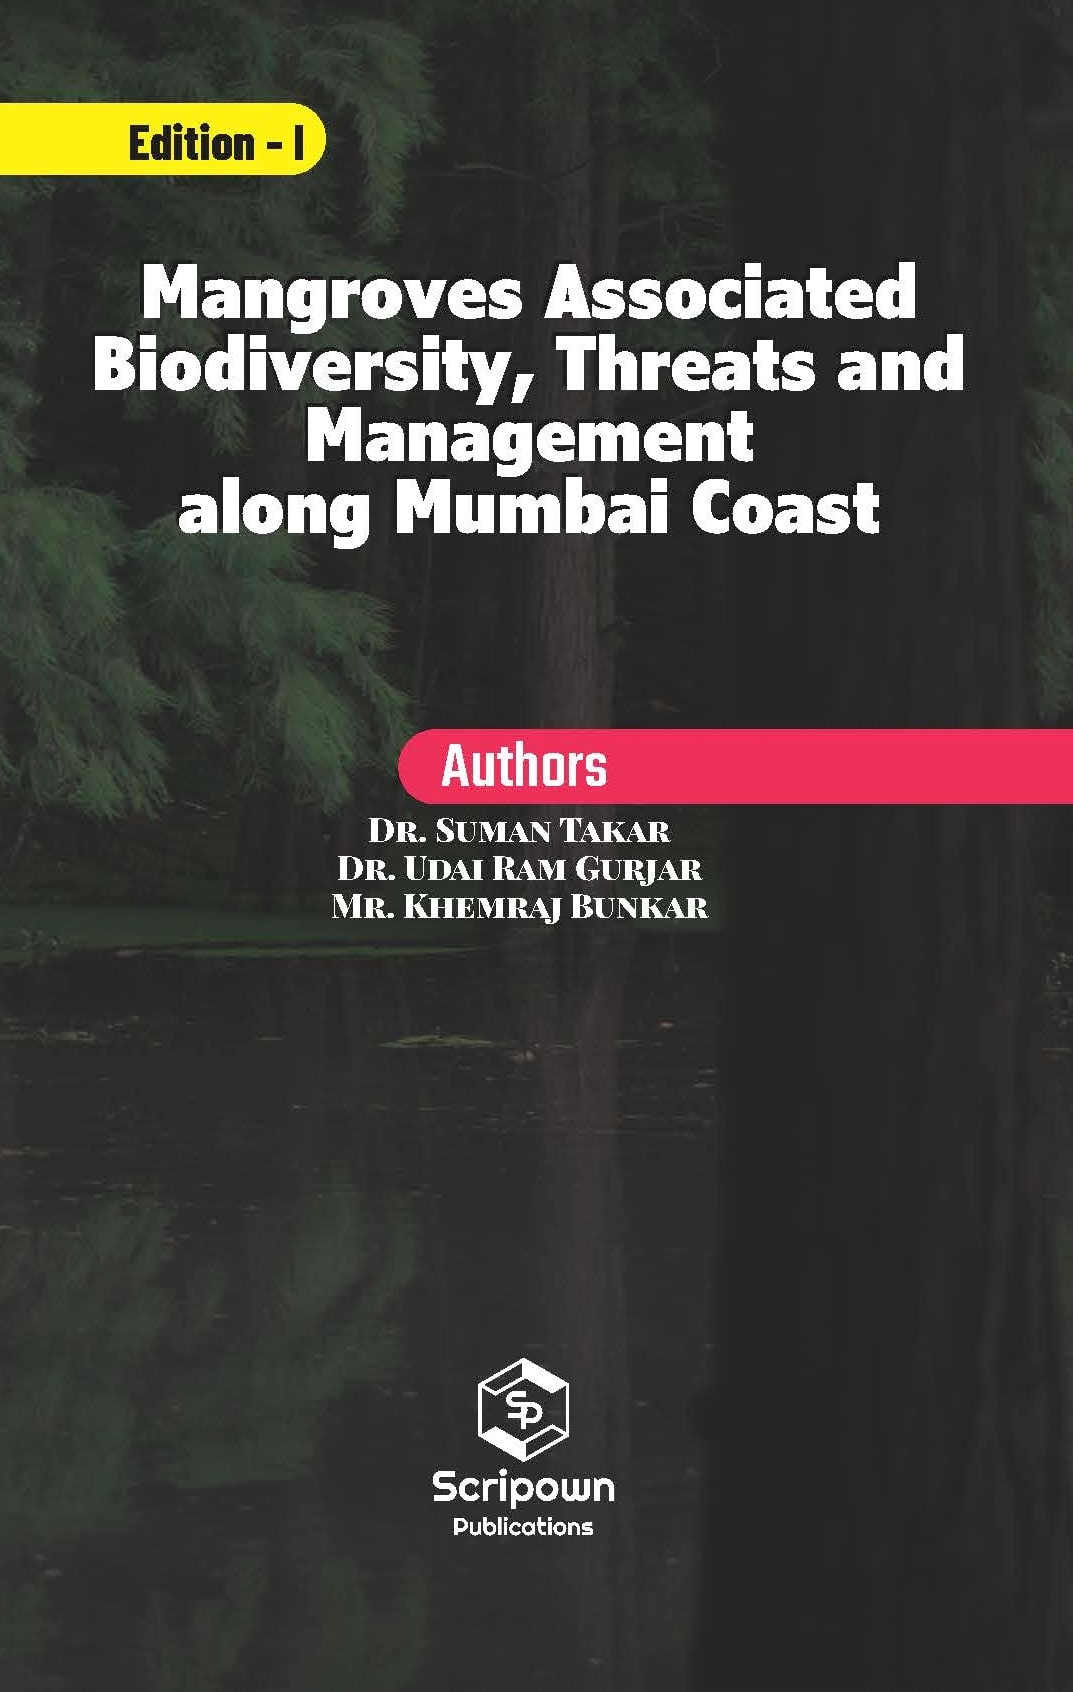 Mangroves Associated Biodiversity, Threats and Management along Mumbai Coast